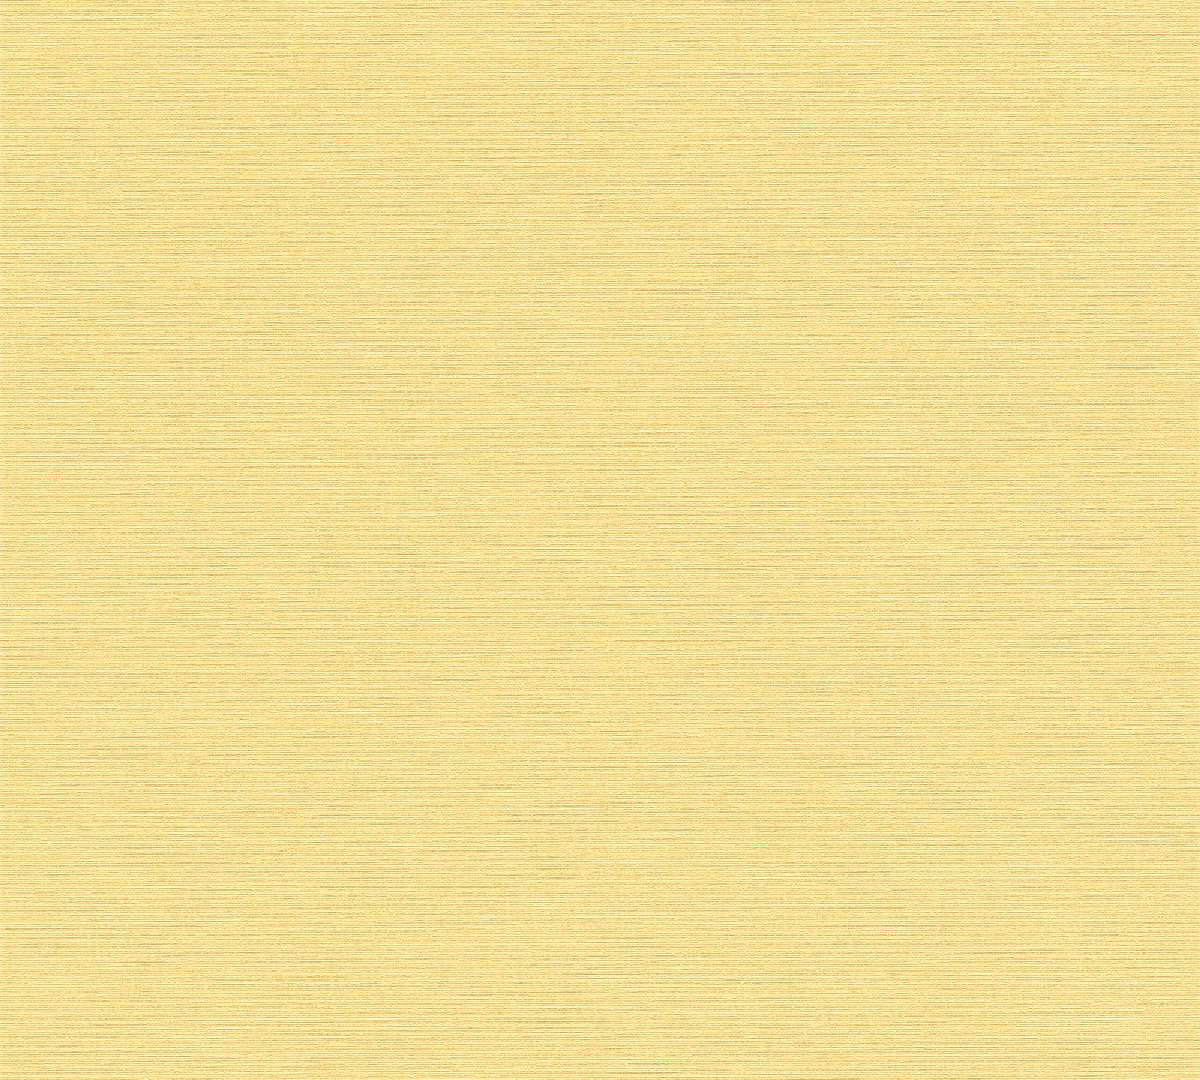 Vliestapete House of Turnowsky 389036 - einfarbige Tapete Muster - Gelb, 